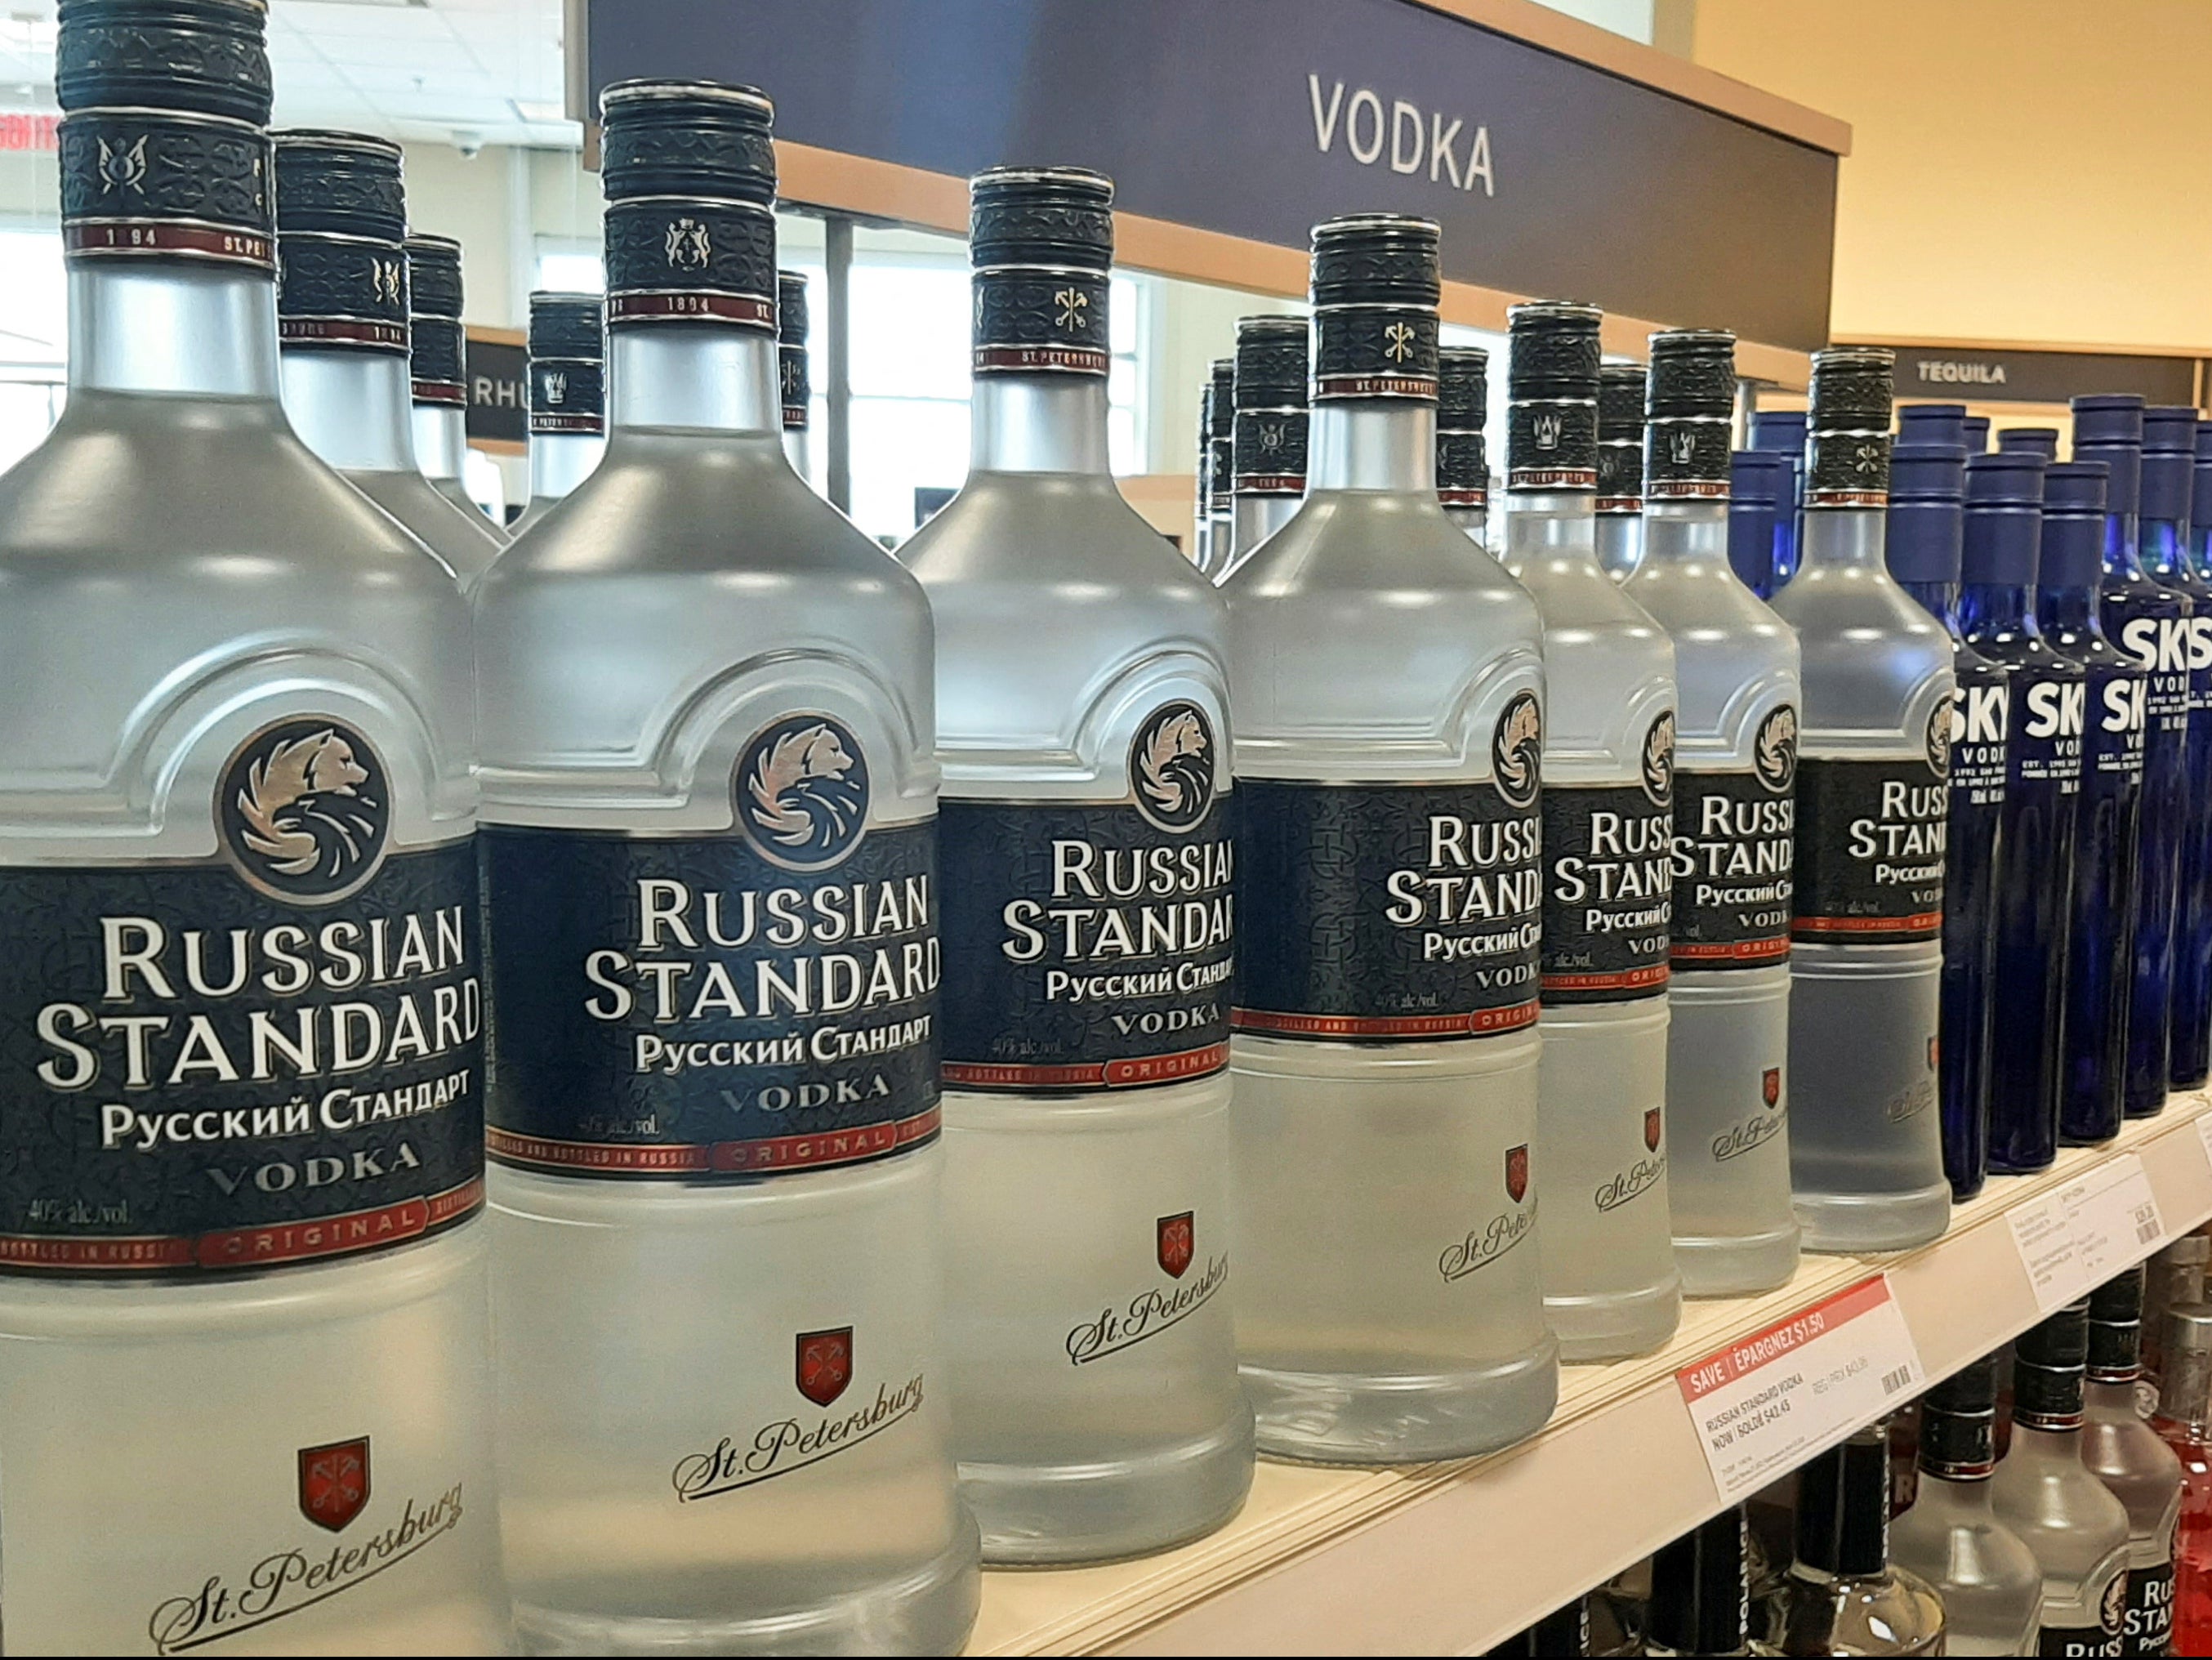 Russian Standard Vodka is distilled in St Petersburg